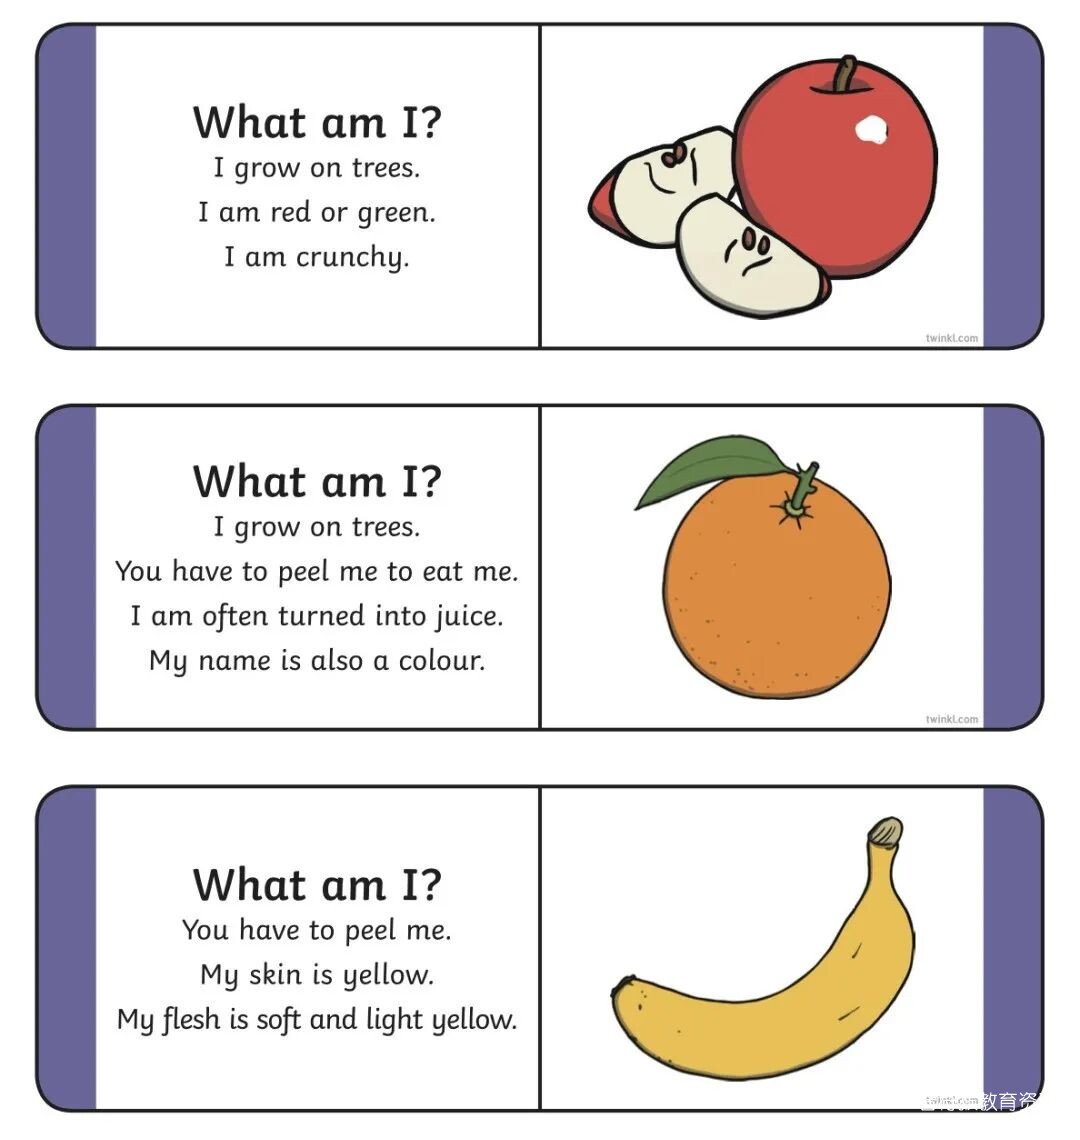 What Am I 猜谜游戏卡提升幼儿英语口语水平、阅读理解能力